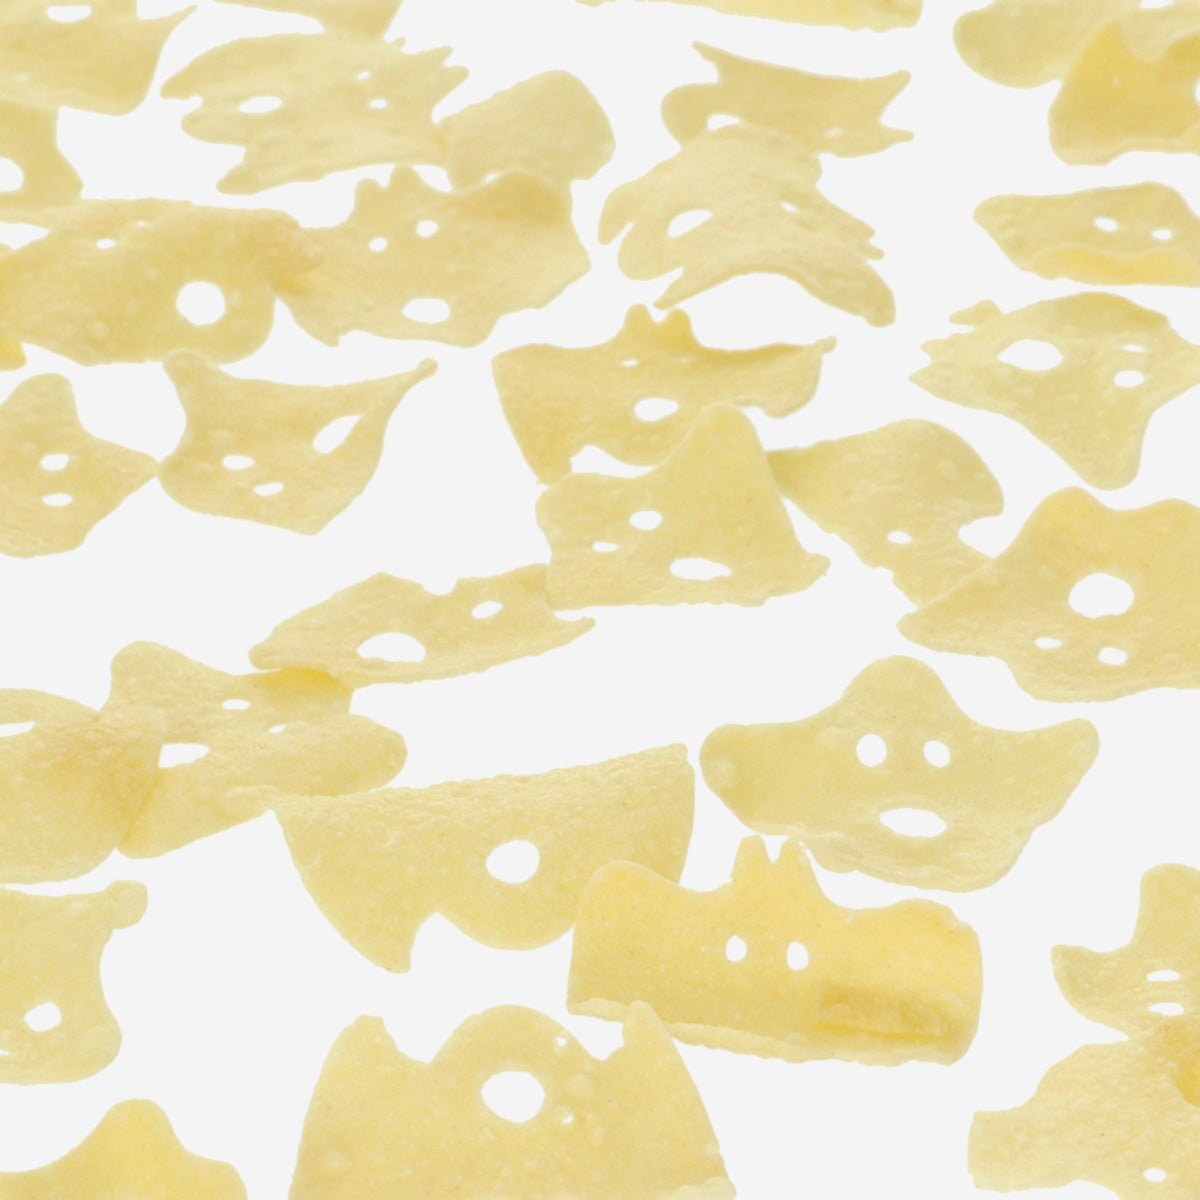 Ghostly chips. With salt Food Flying Tiger Copenhagen 